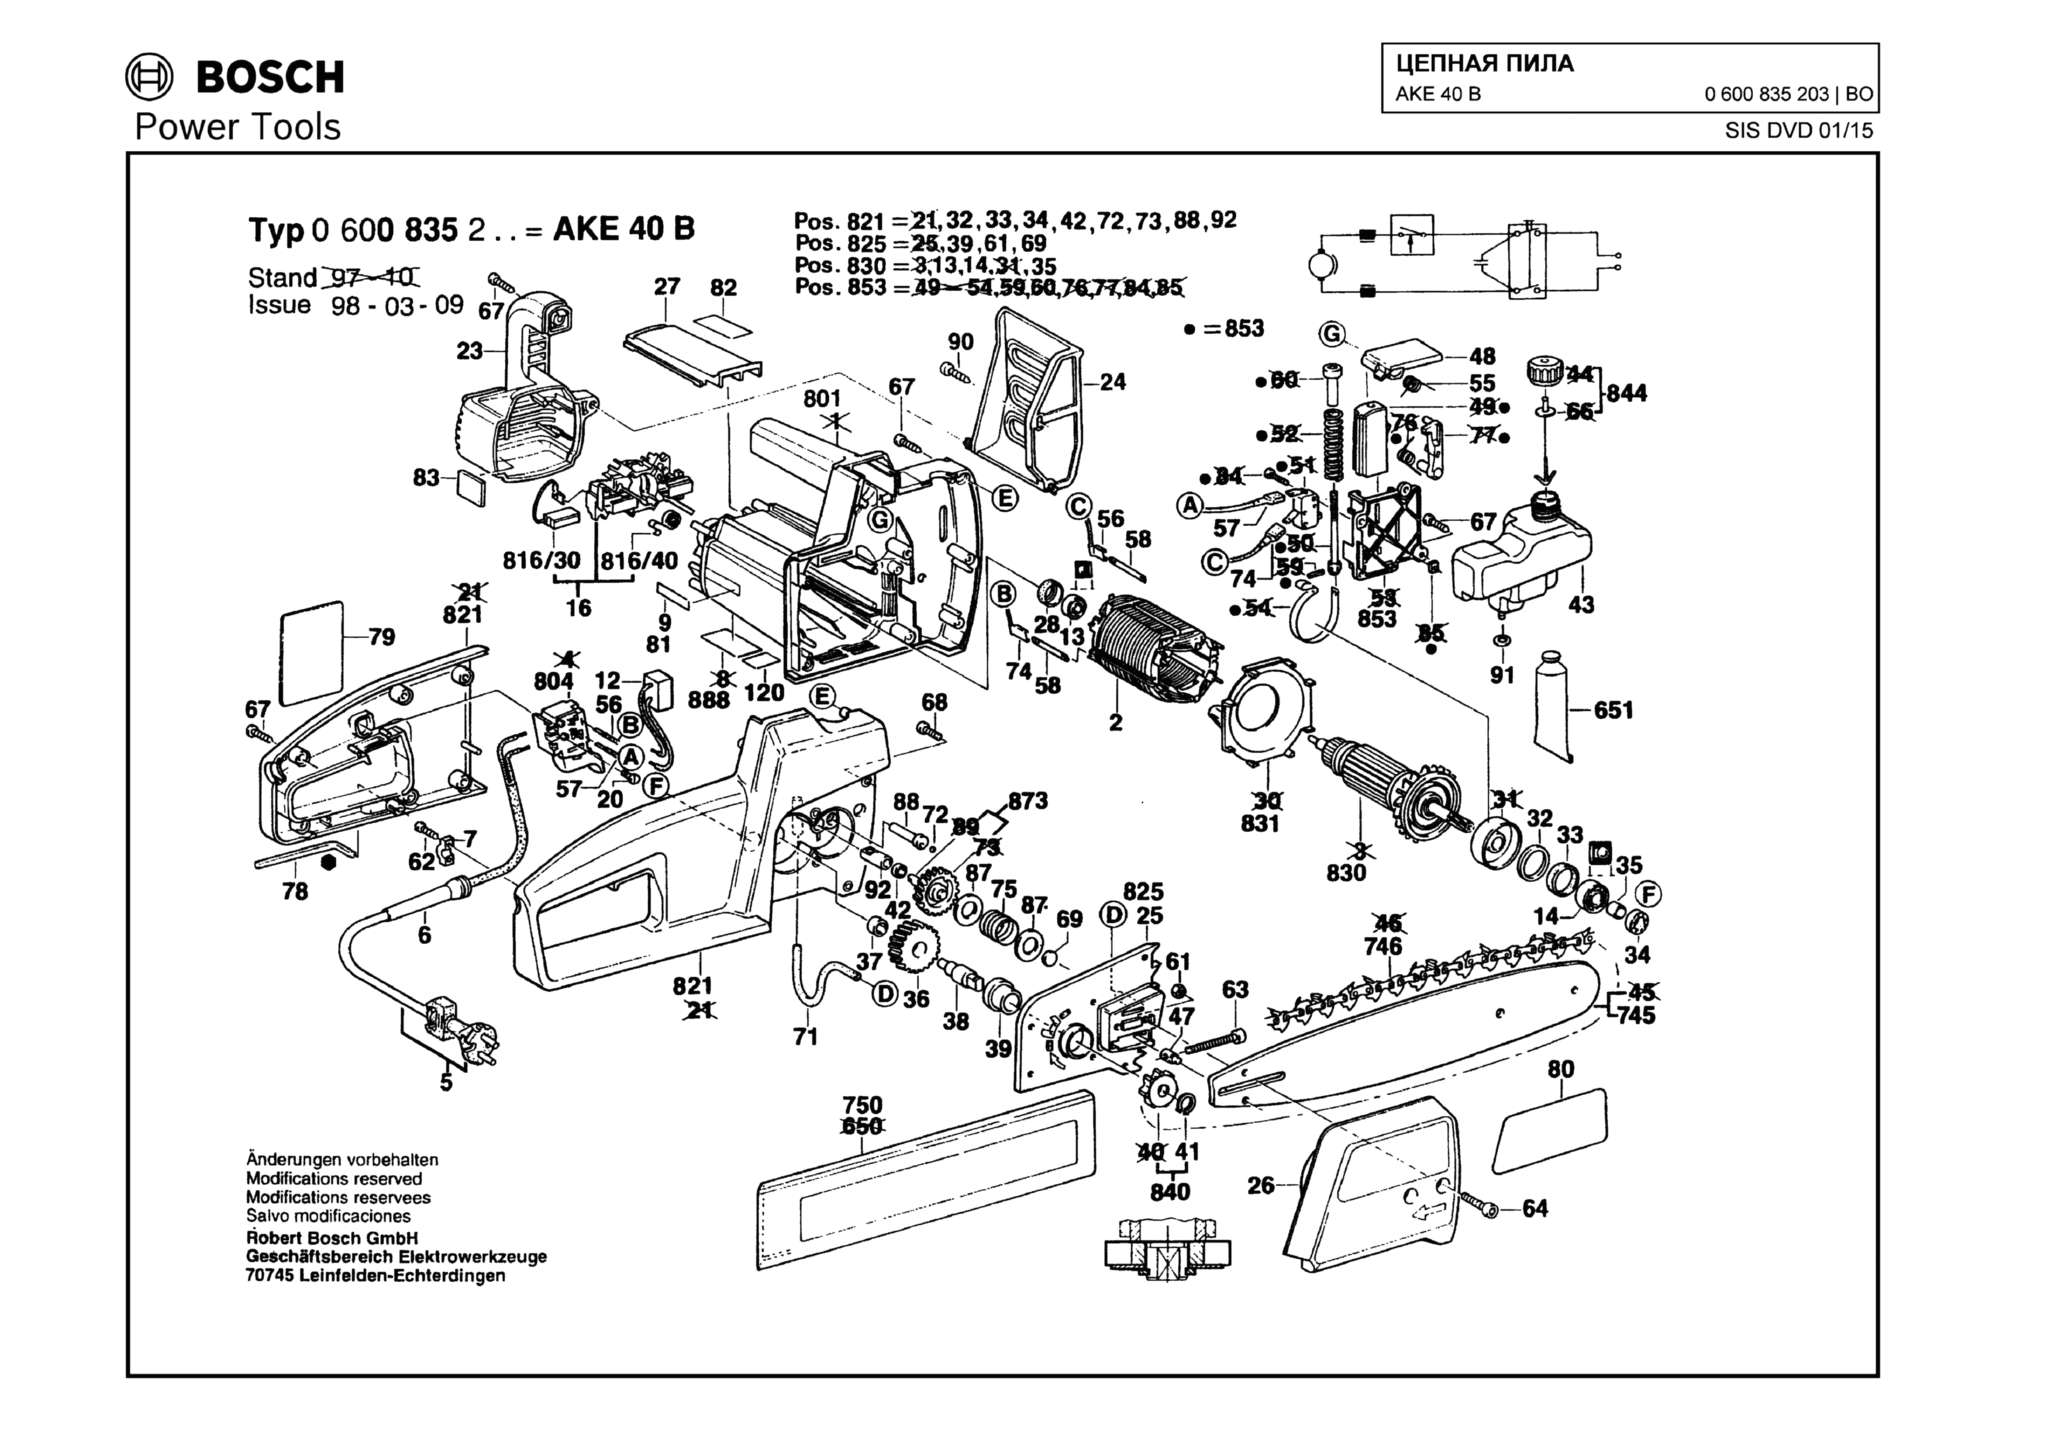 Запчасти, схема и деталировка Bosch AKE 40 B (ТИП 0600835203)